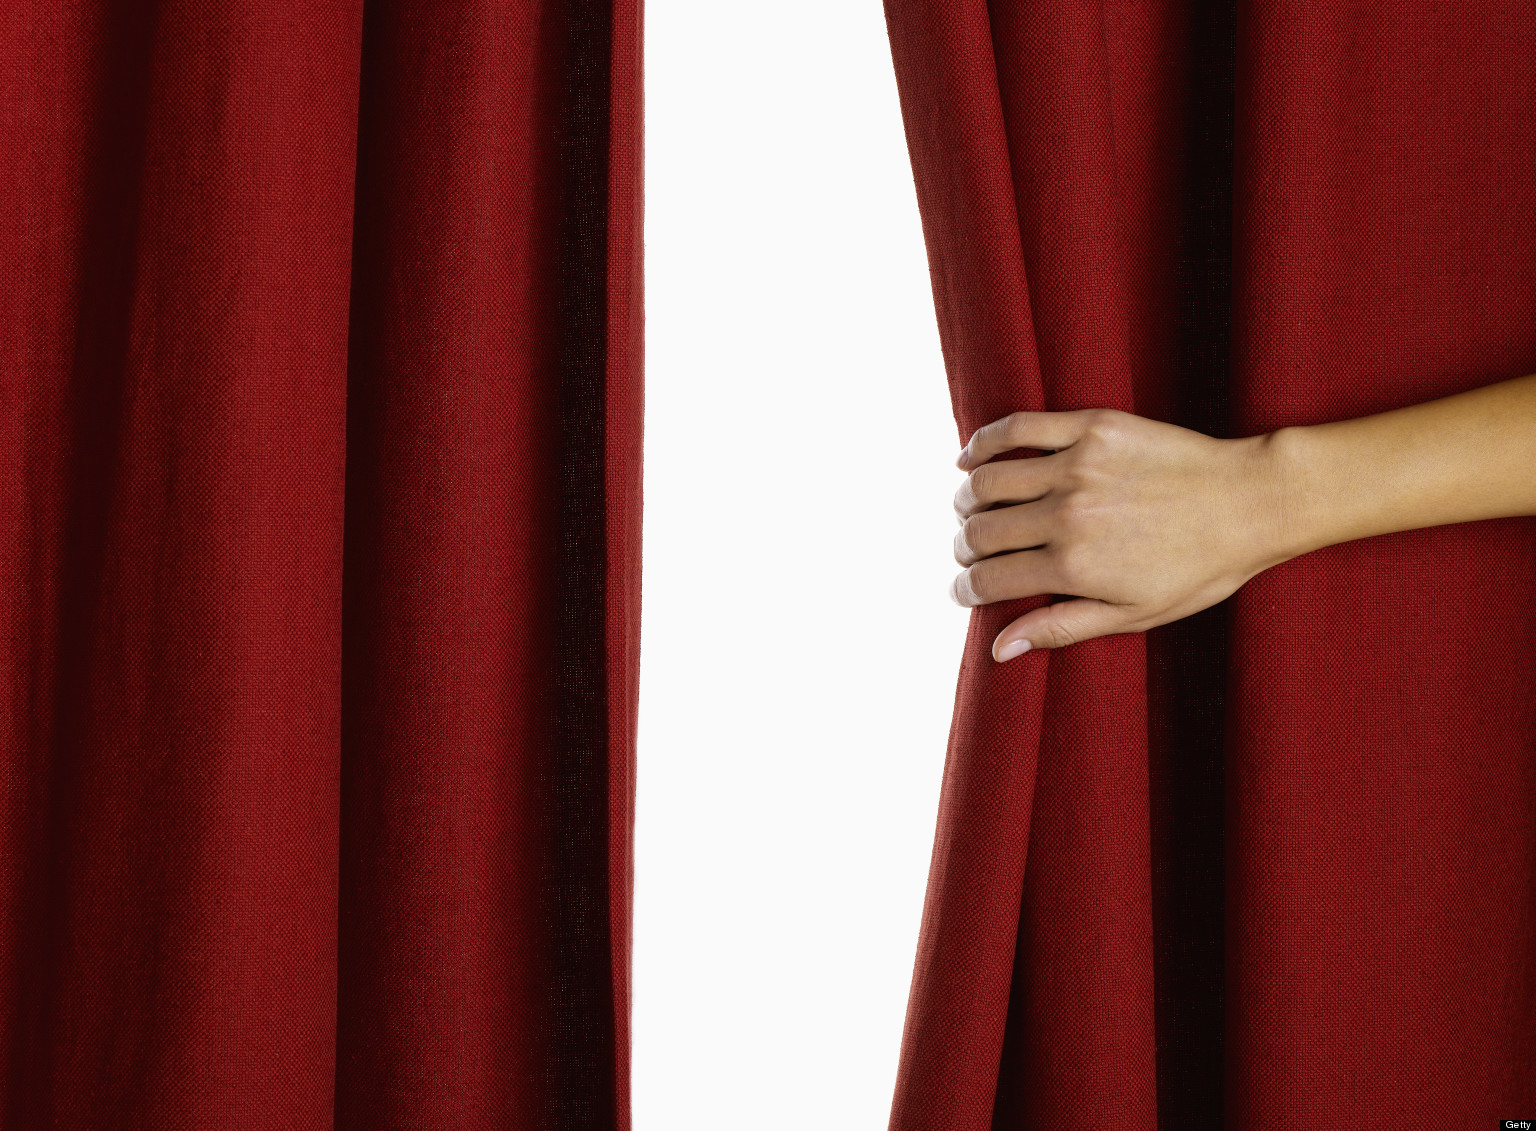 Peeking-Behind-the-Curtain-image.jpg (1536×1131)